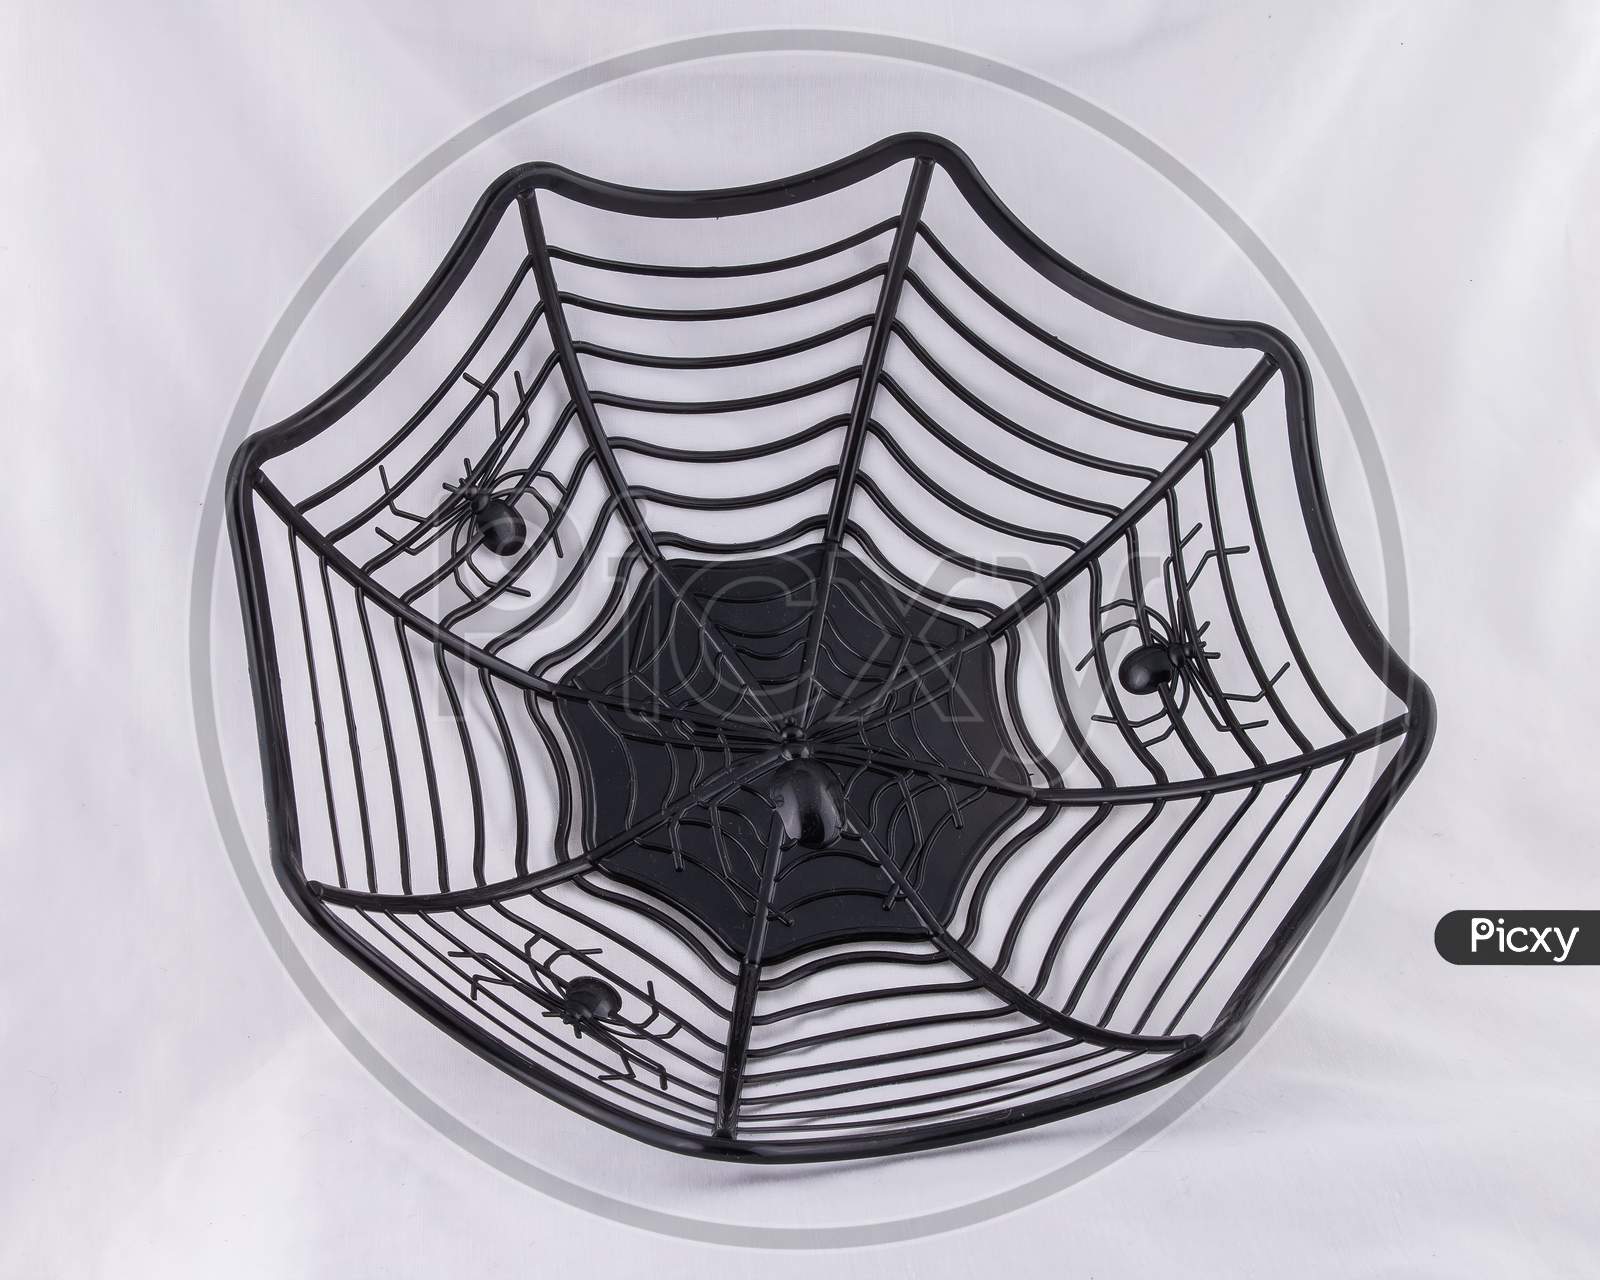 Halloween candy treat bowl in spider cobweb design